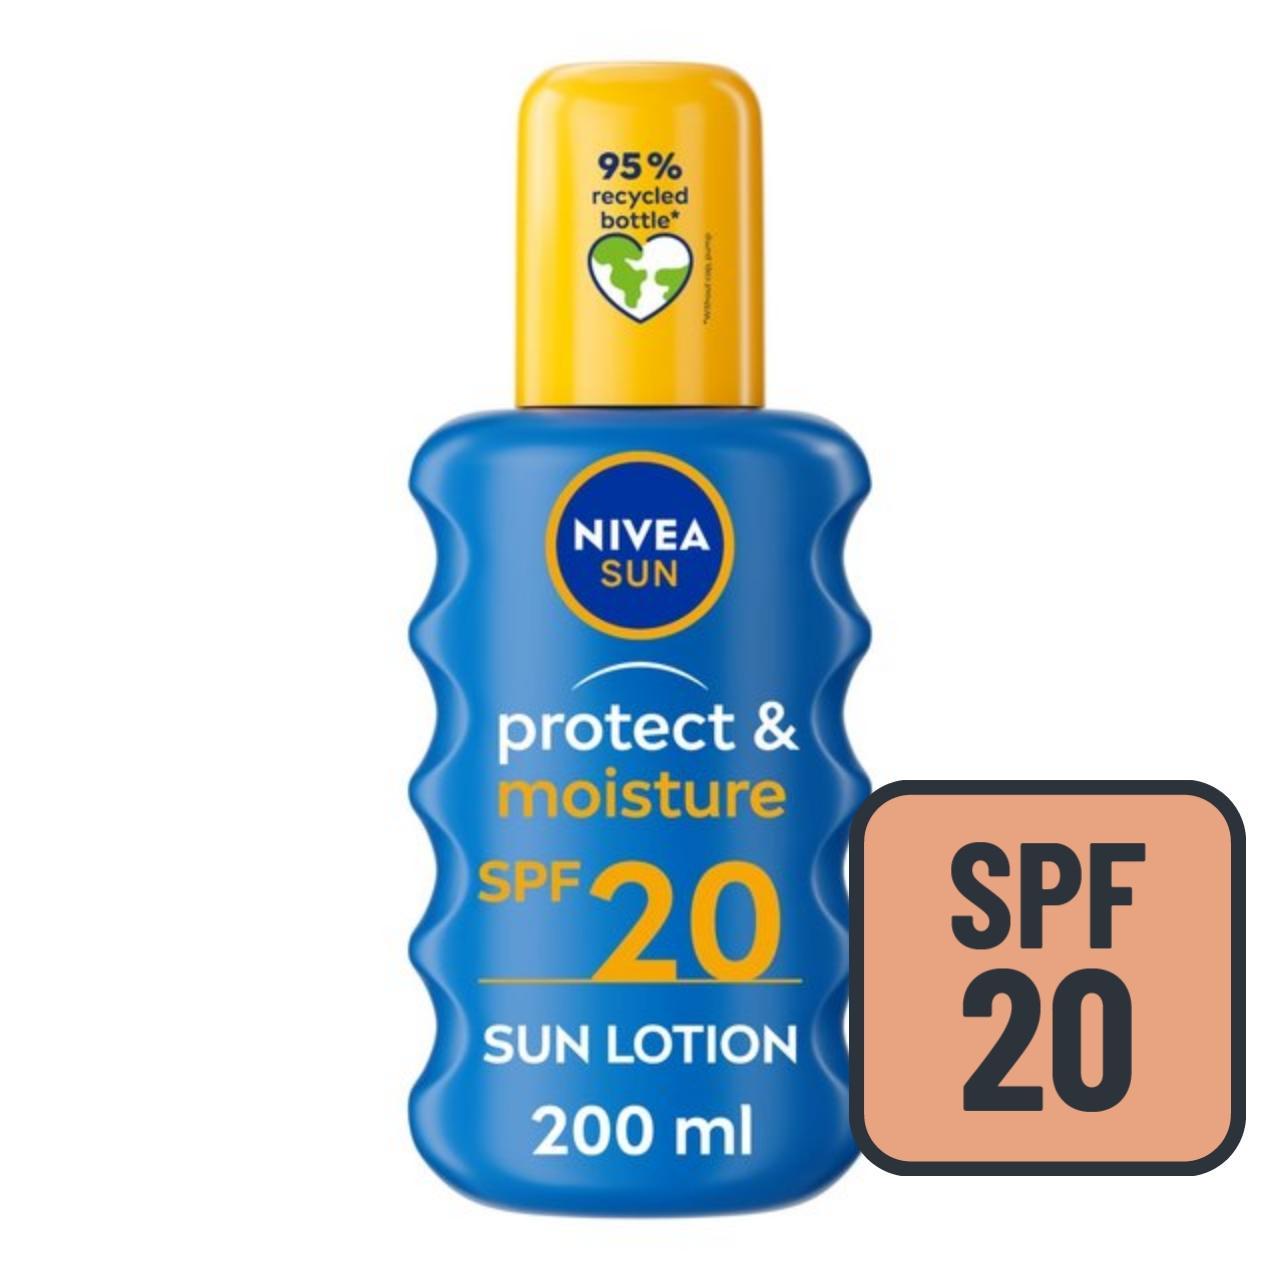 Nivea SUN Protect & Moisture Sunscreen Spray SPF 20